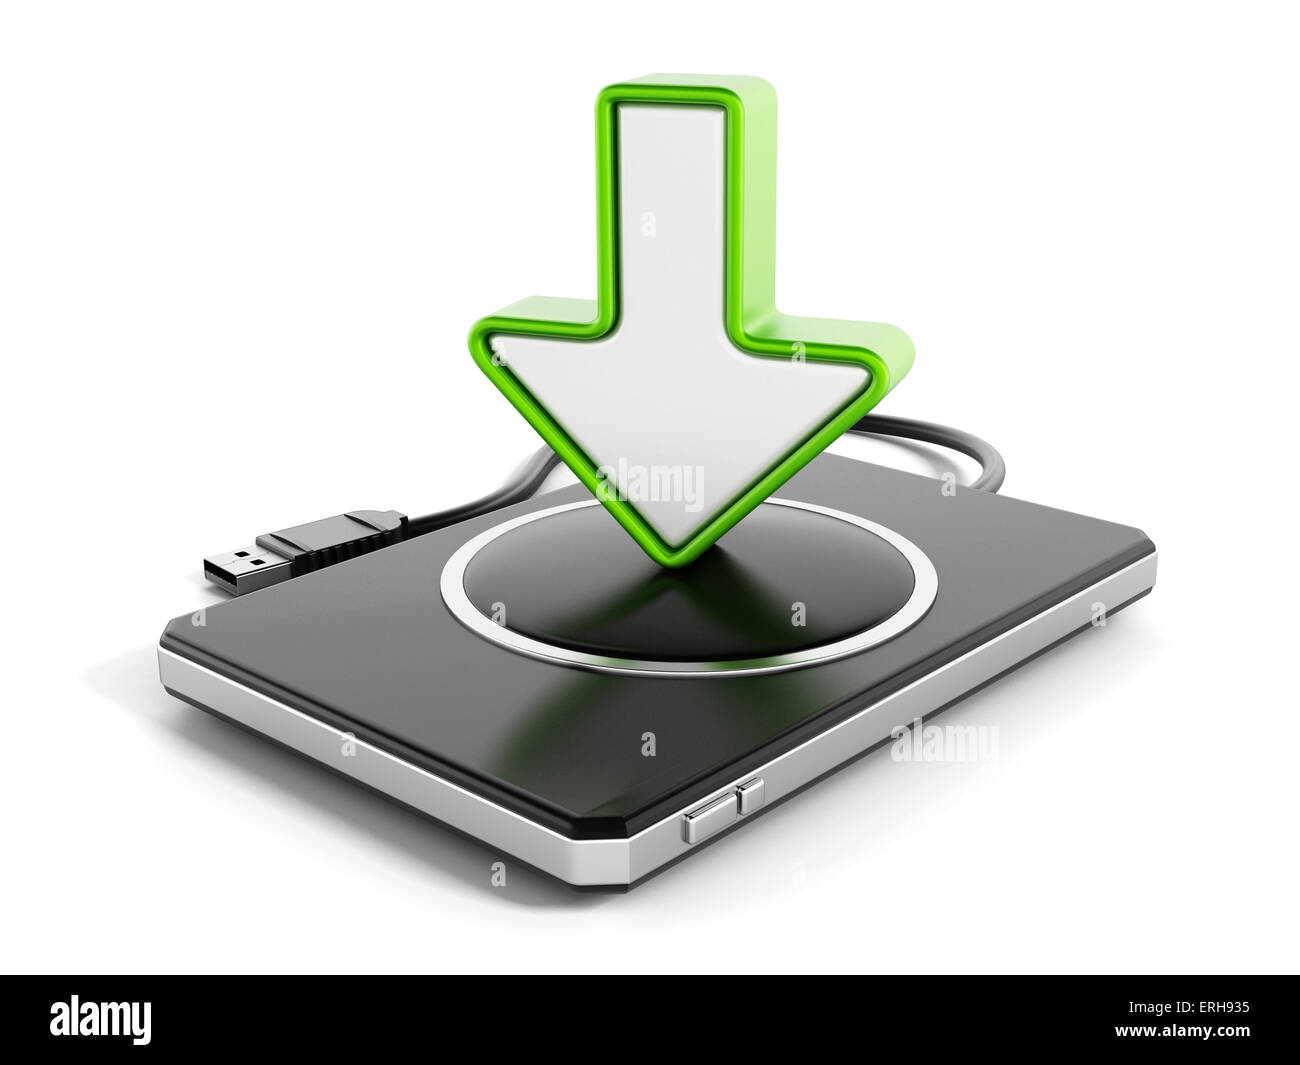 Green arrow icon on portable hard drive Stock Photo